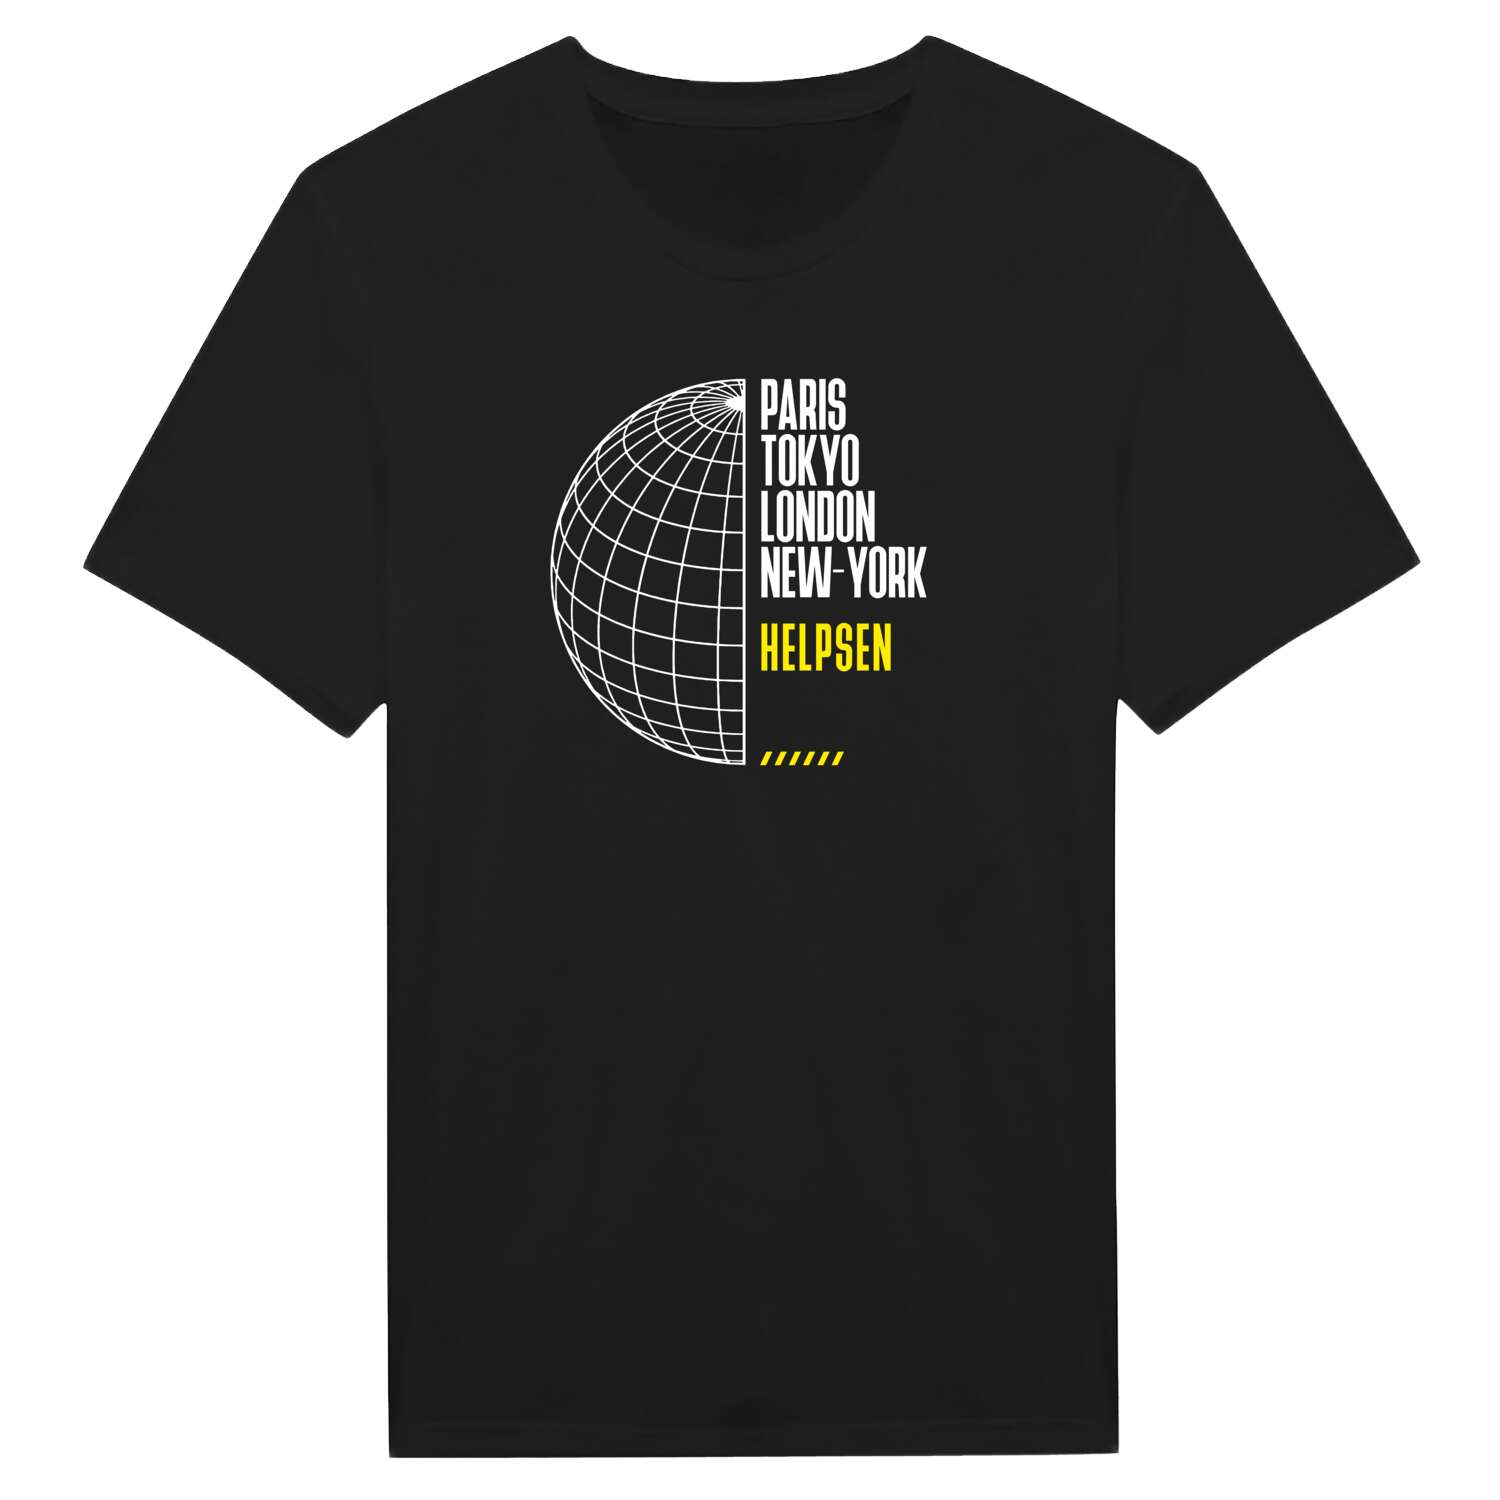 Helpsen T-Shirt »Paris Tokyo London«